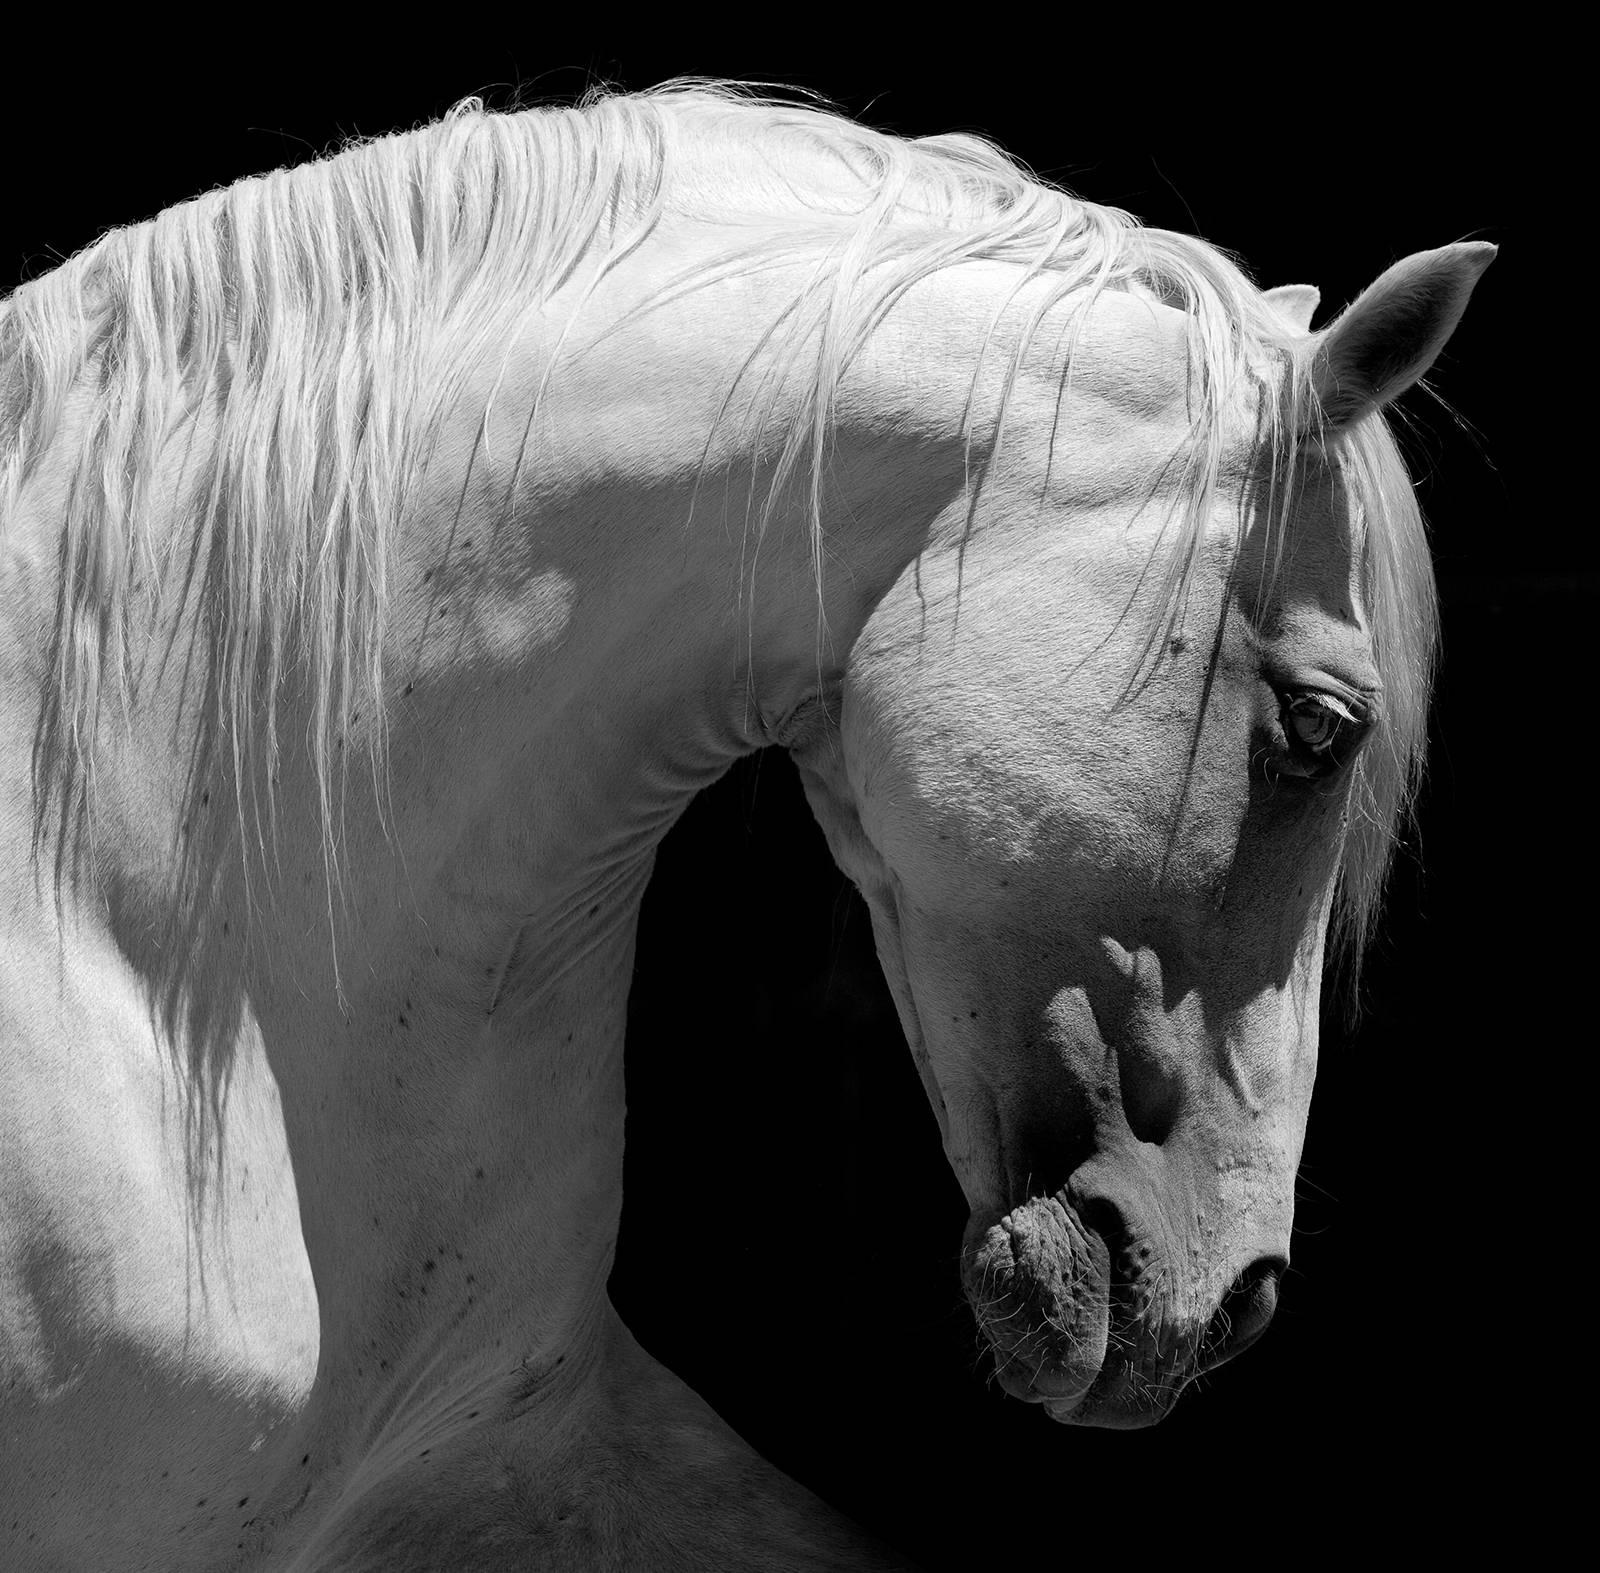 Baldur Tryggvason Black and White Photograph - 'White Andalsuian Horse' C print Print